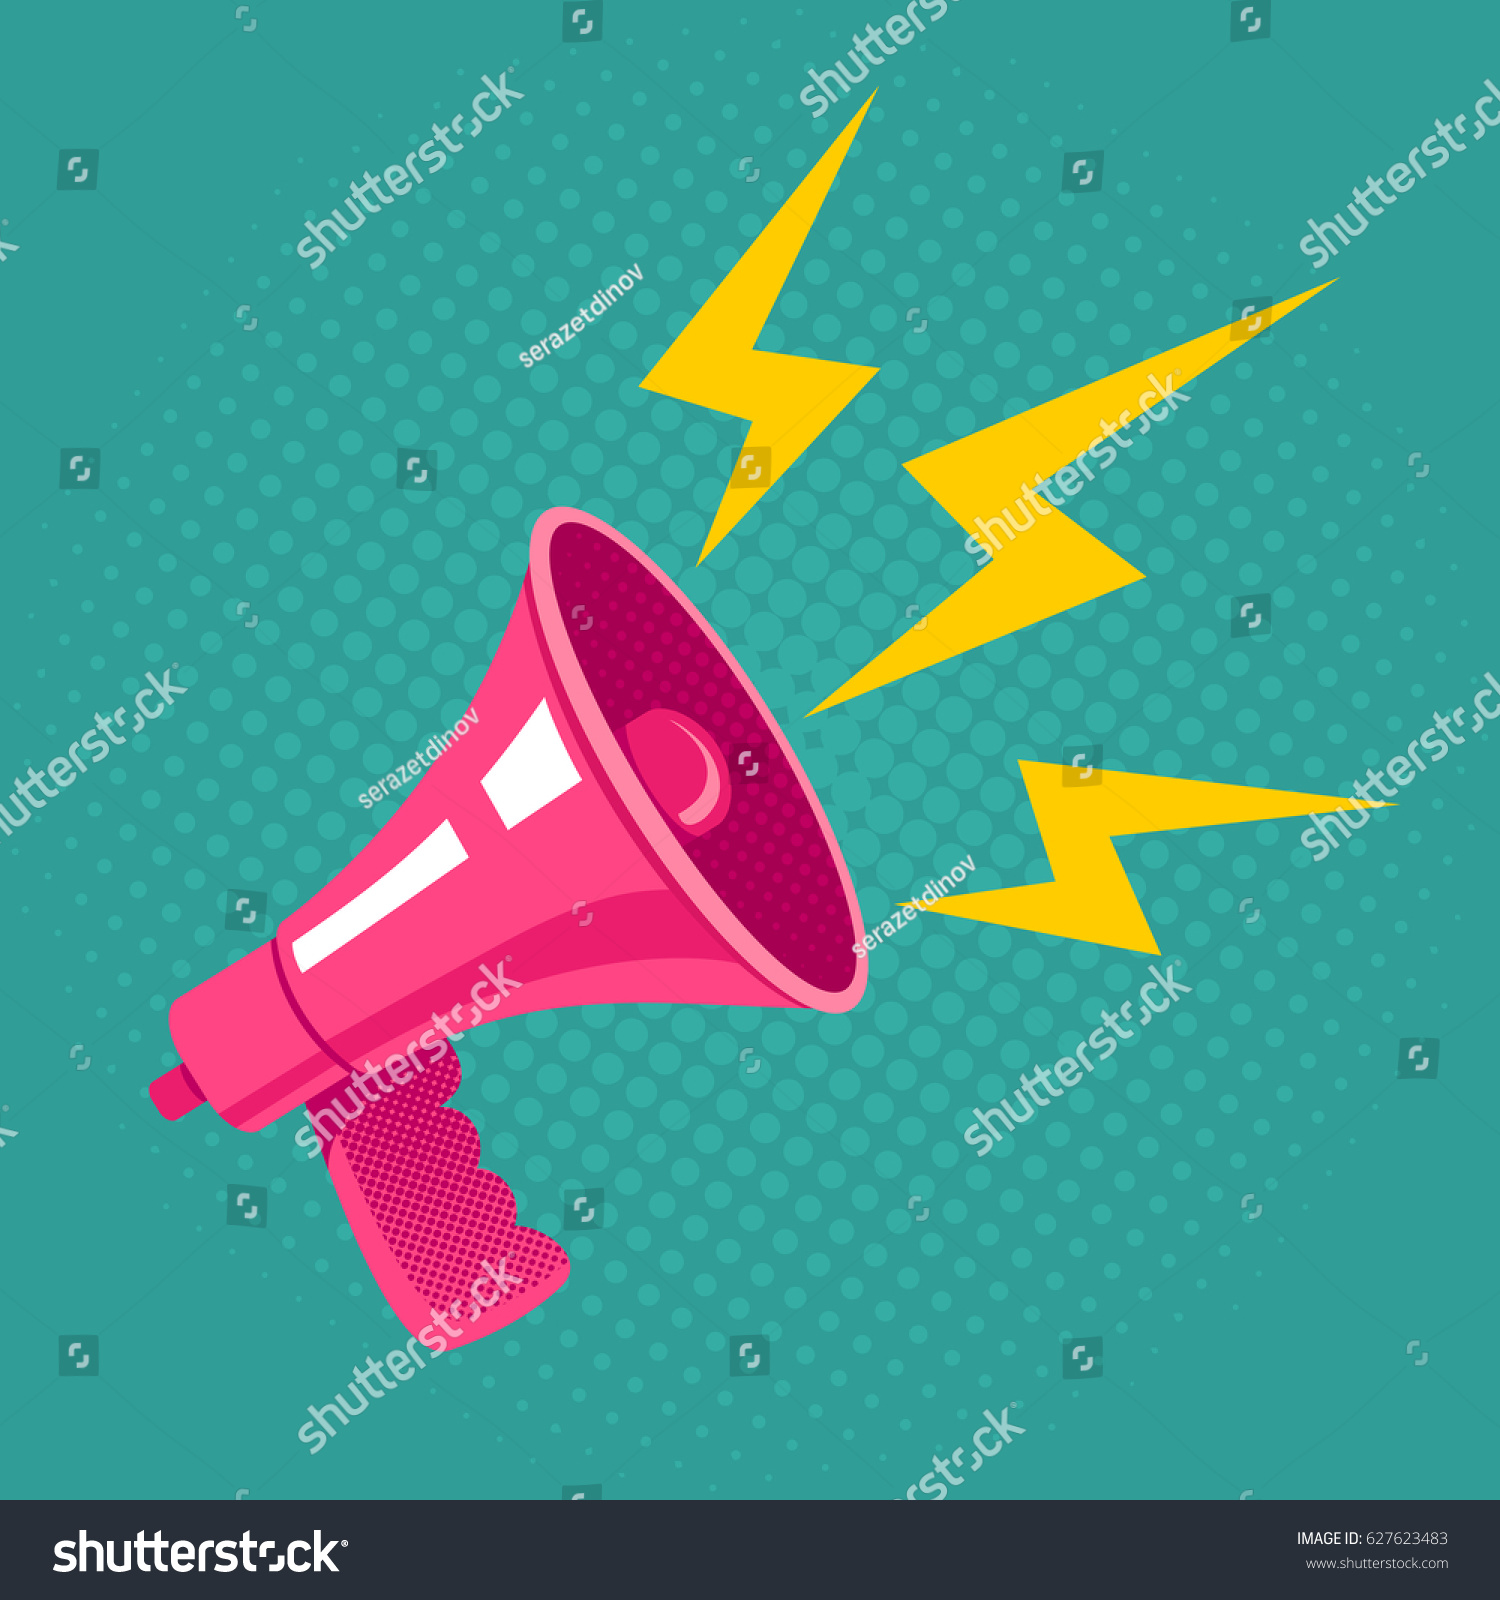 Vector vintage poster with pink megaphone on halftone background. Pink retro megaphone #627623483